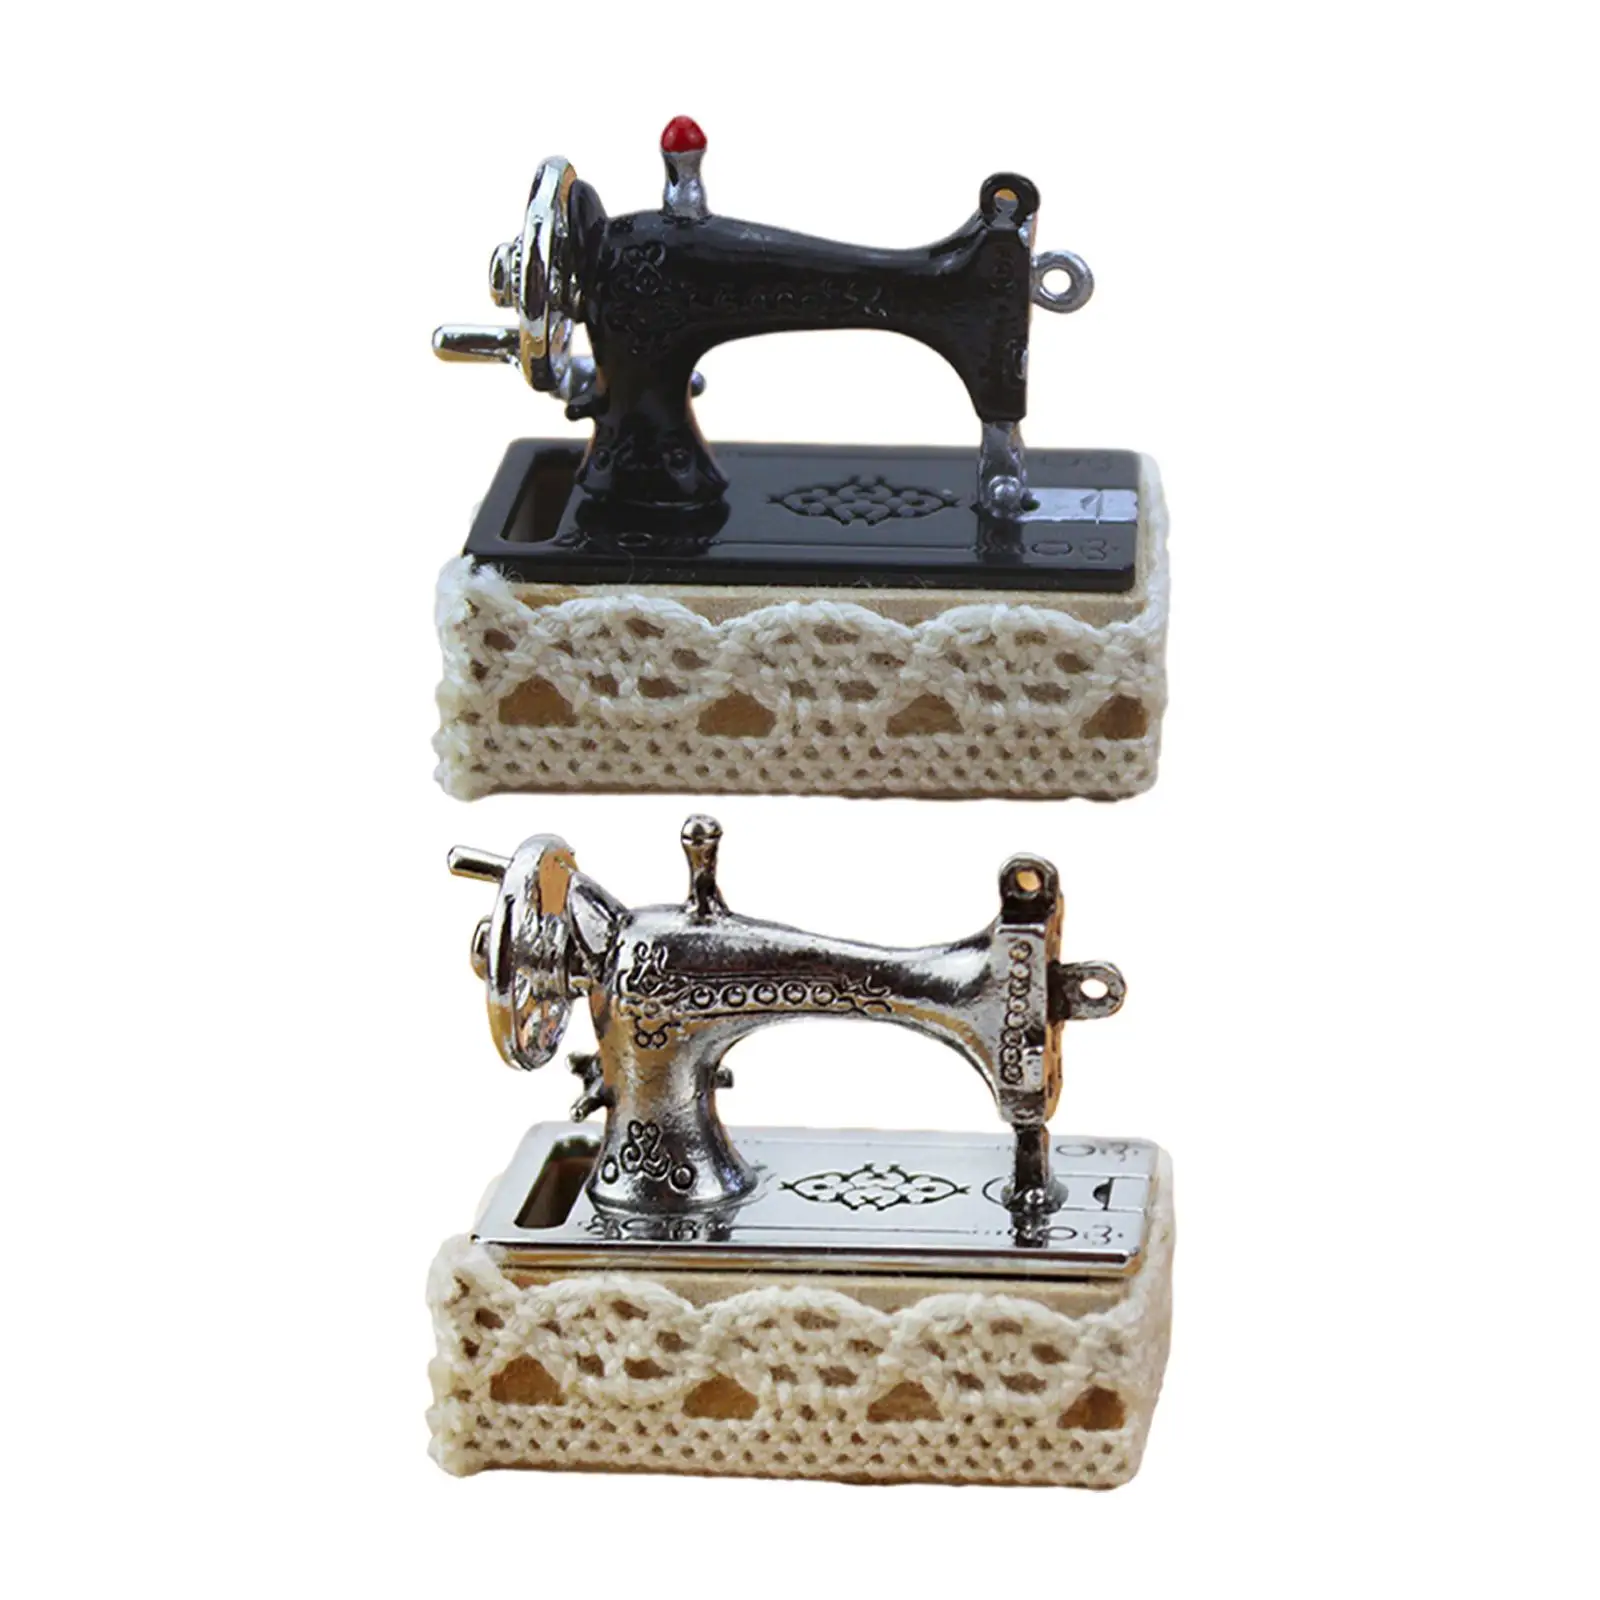 1:12 Dollhouse Sewing Machine DIY Scene Accessories Mini Furniture Decor Model Ornament